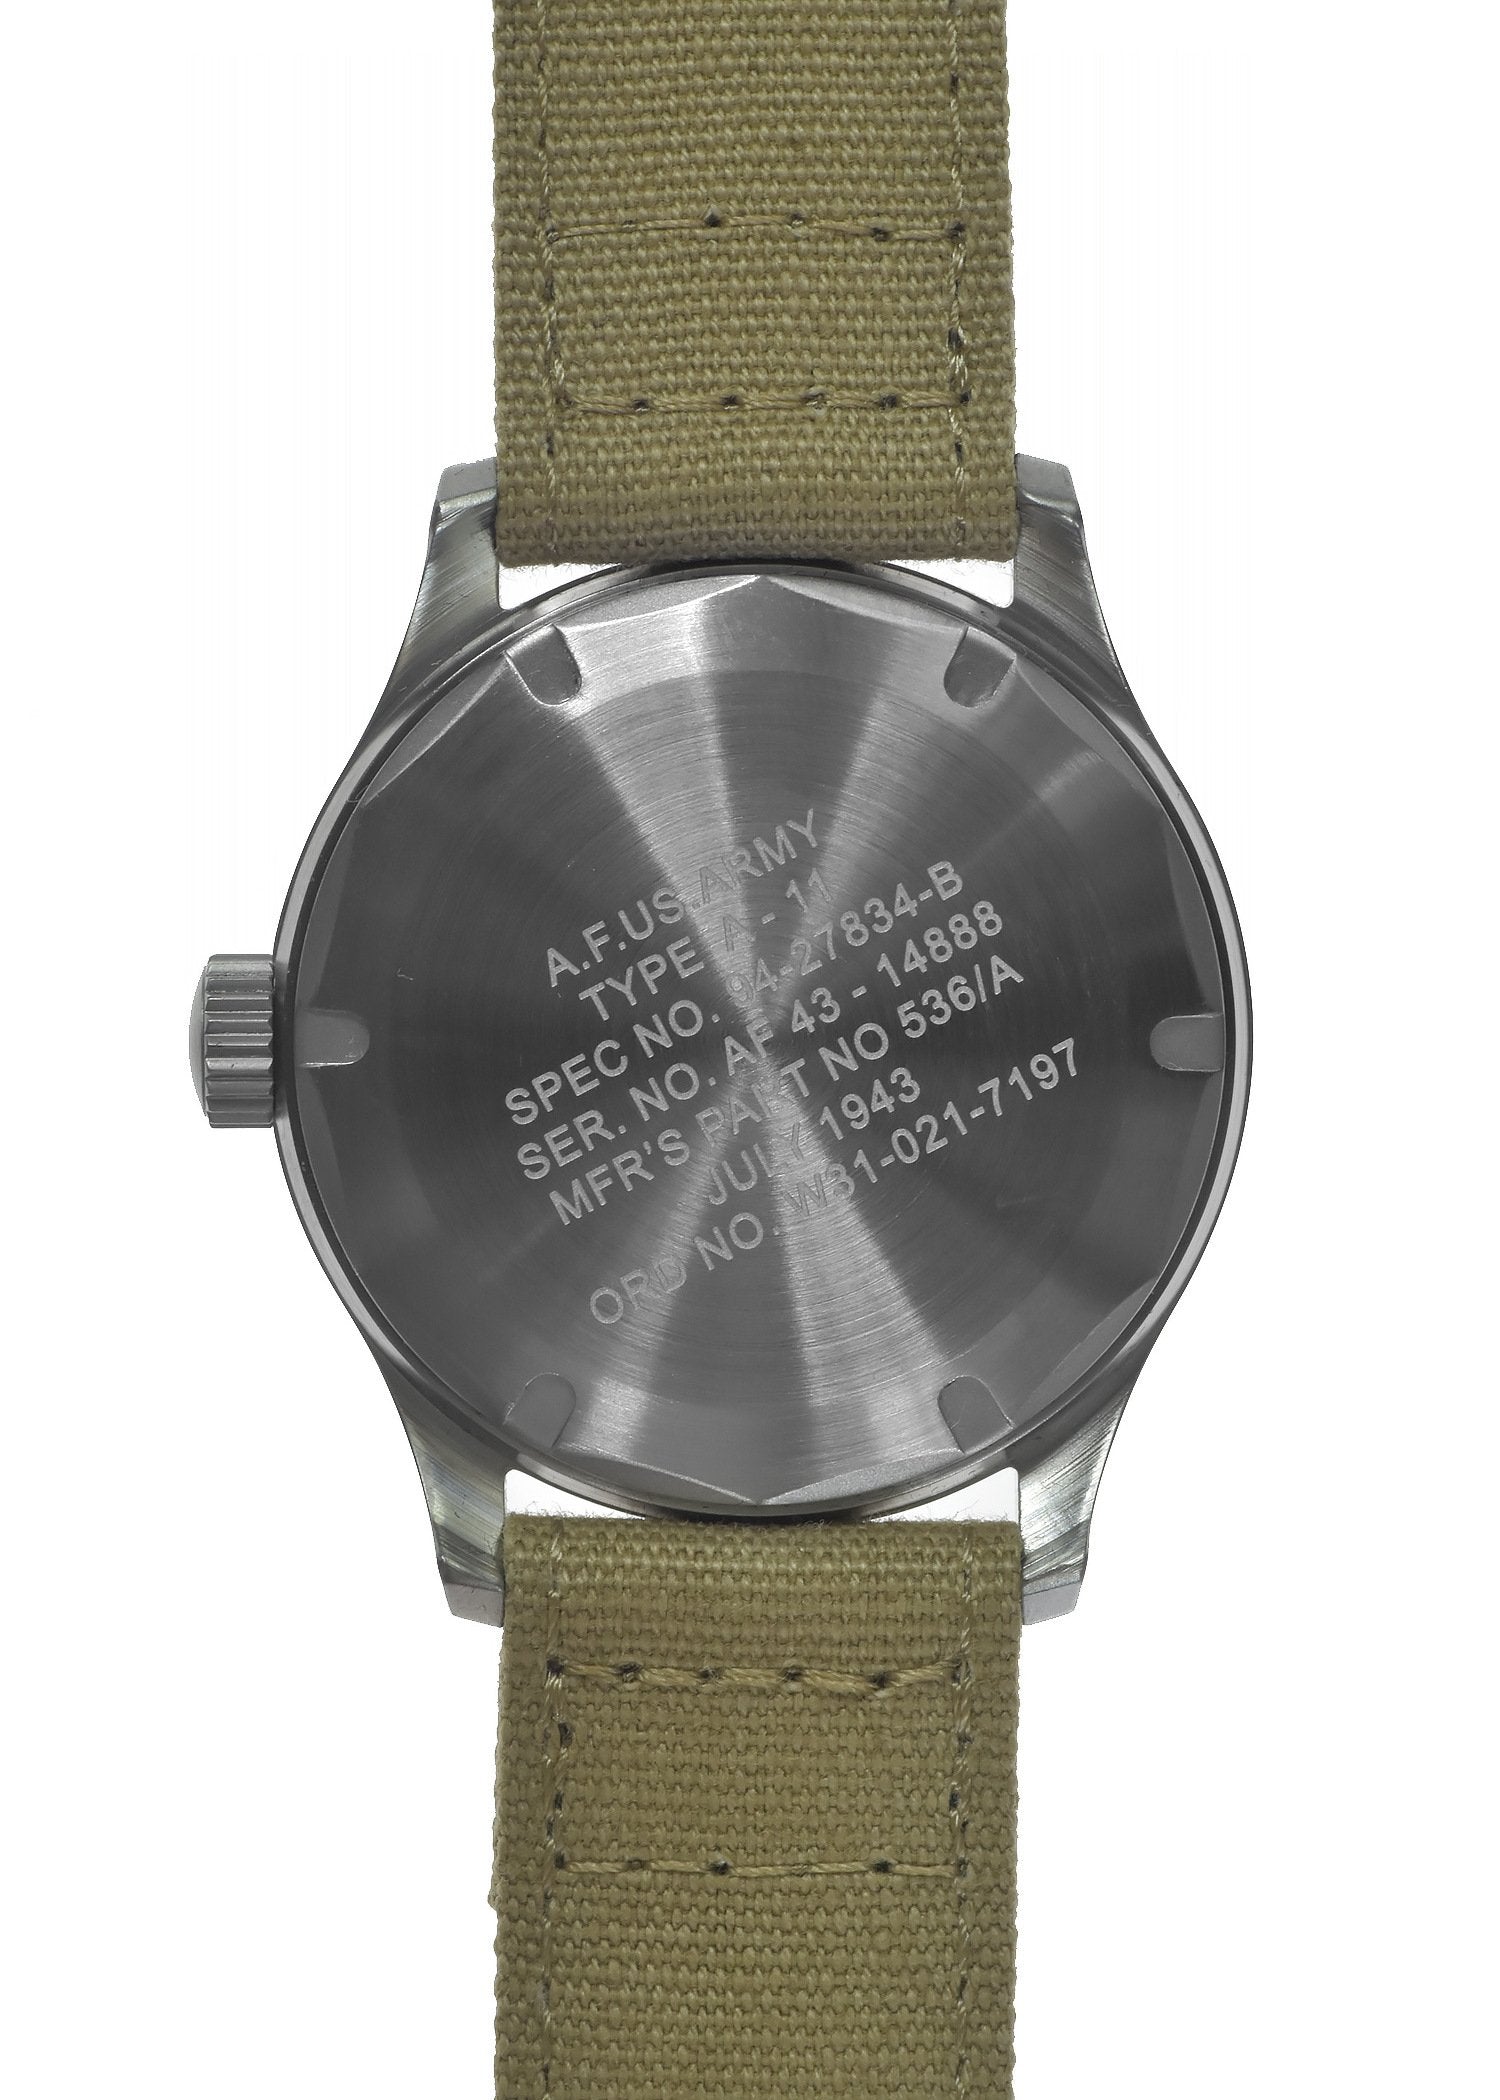 A-11 1940s WWII Pattern Quartz Military Watch 100m